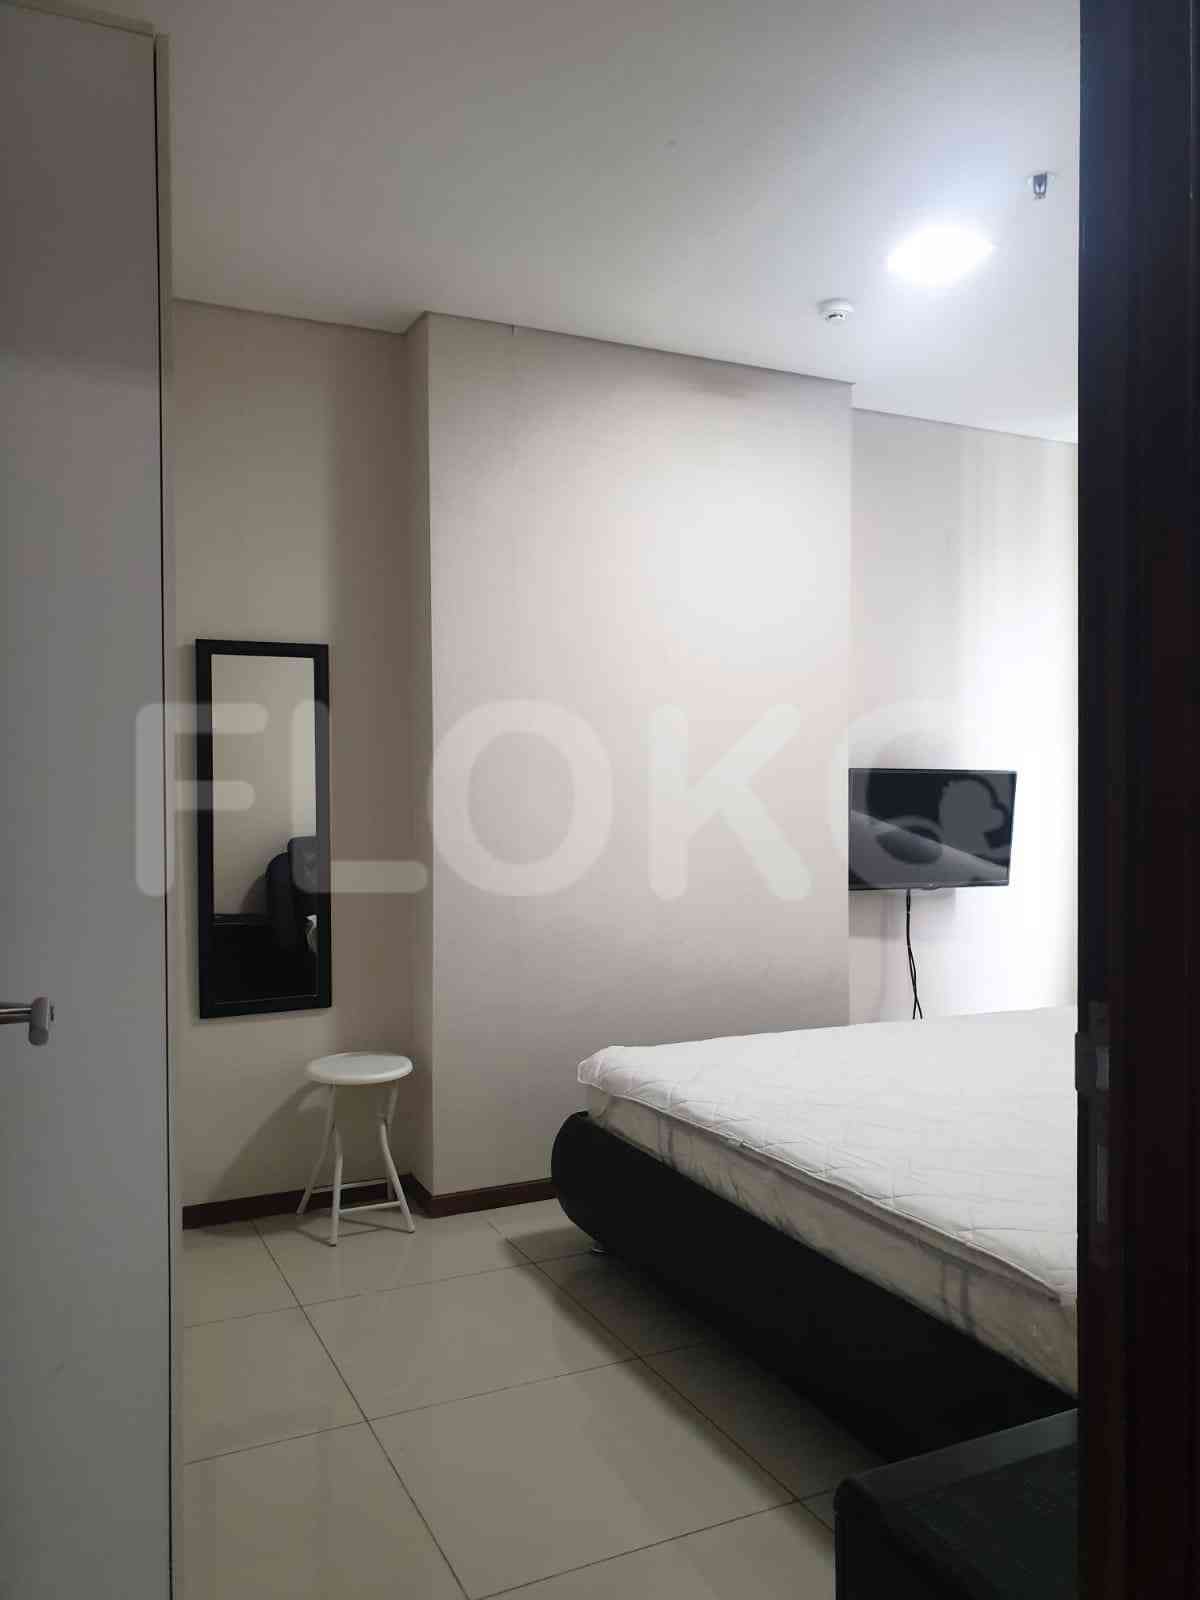 Tipe 1 Kamar Tidur di Lantai 40 untuk disewakan di Thamrin Executive Residence - fth630 1